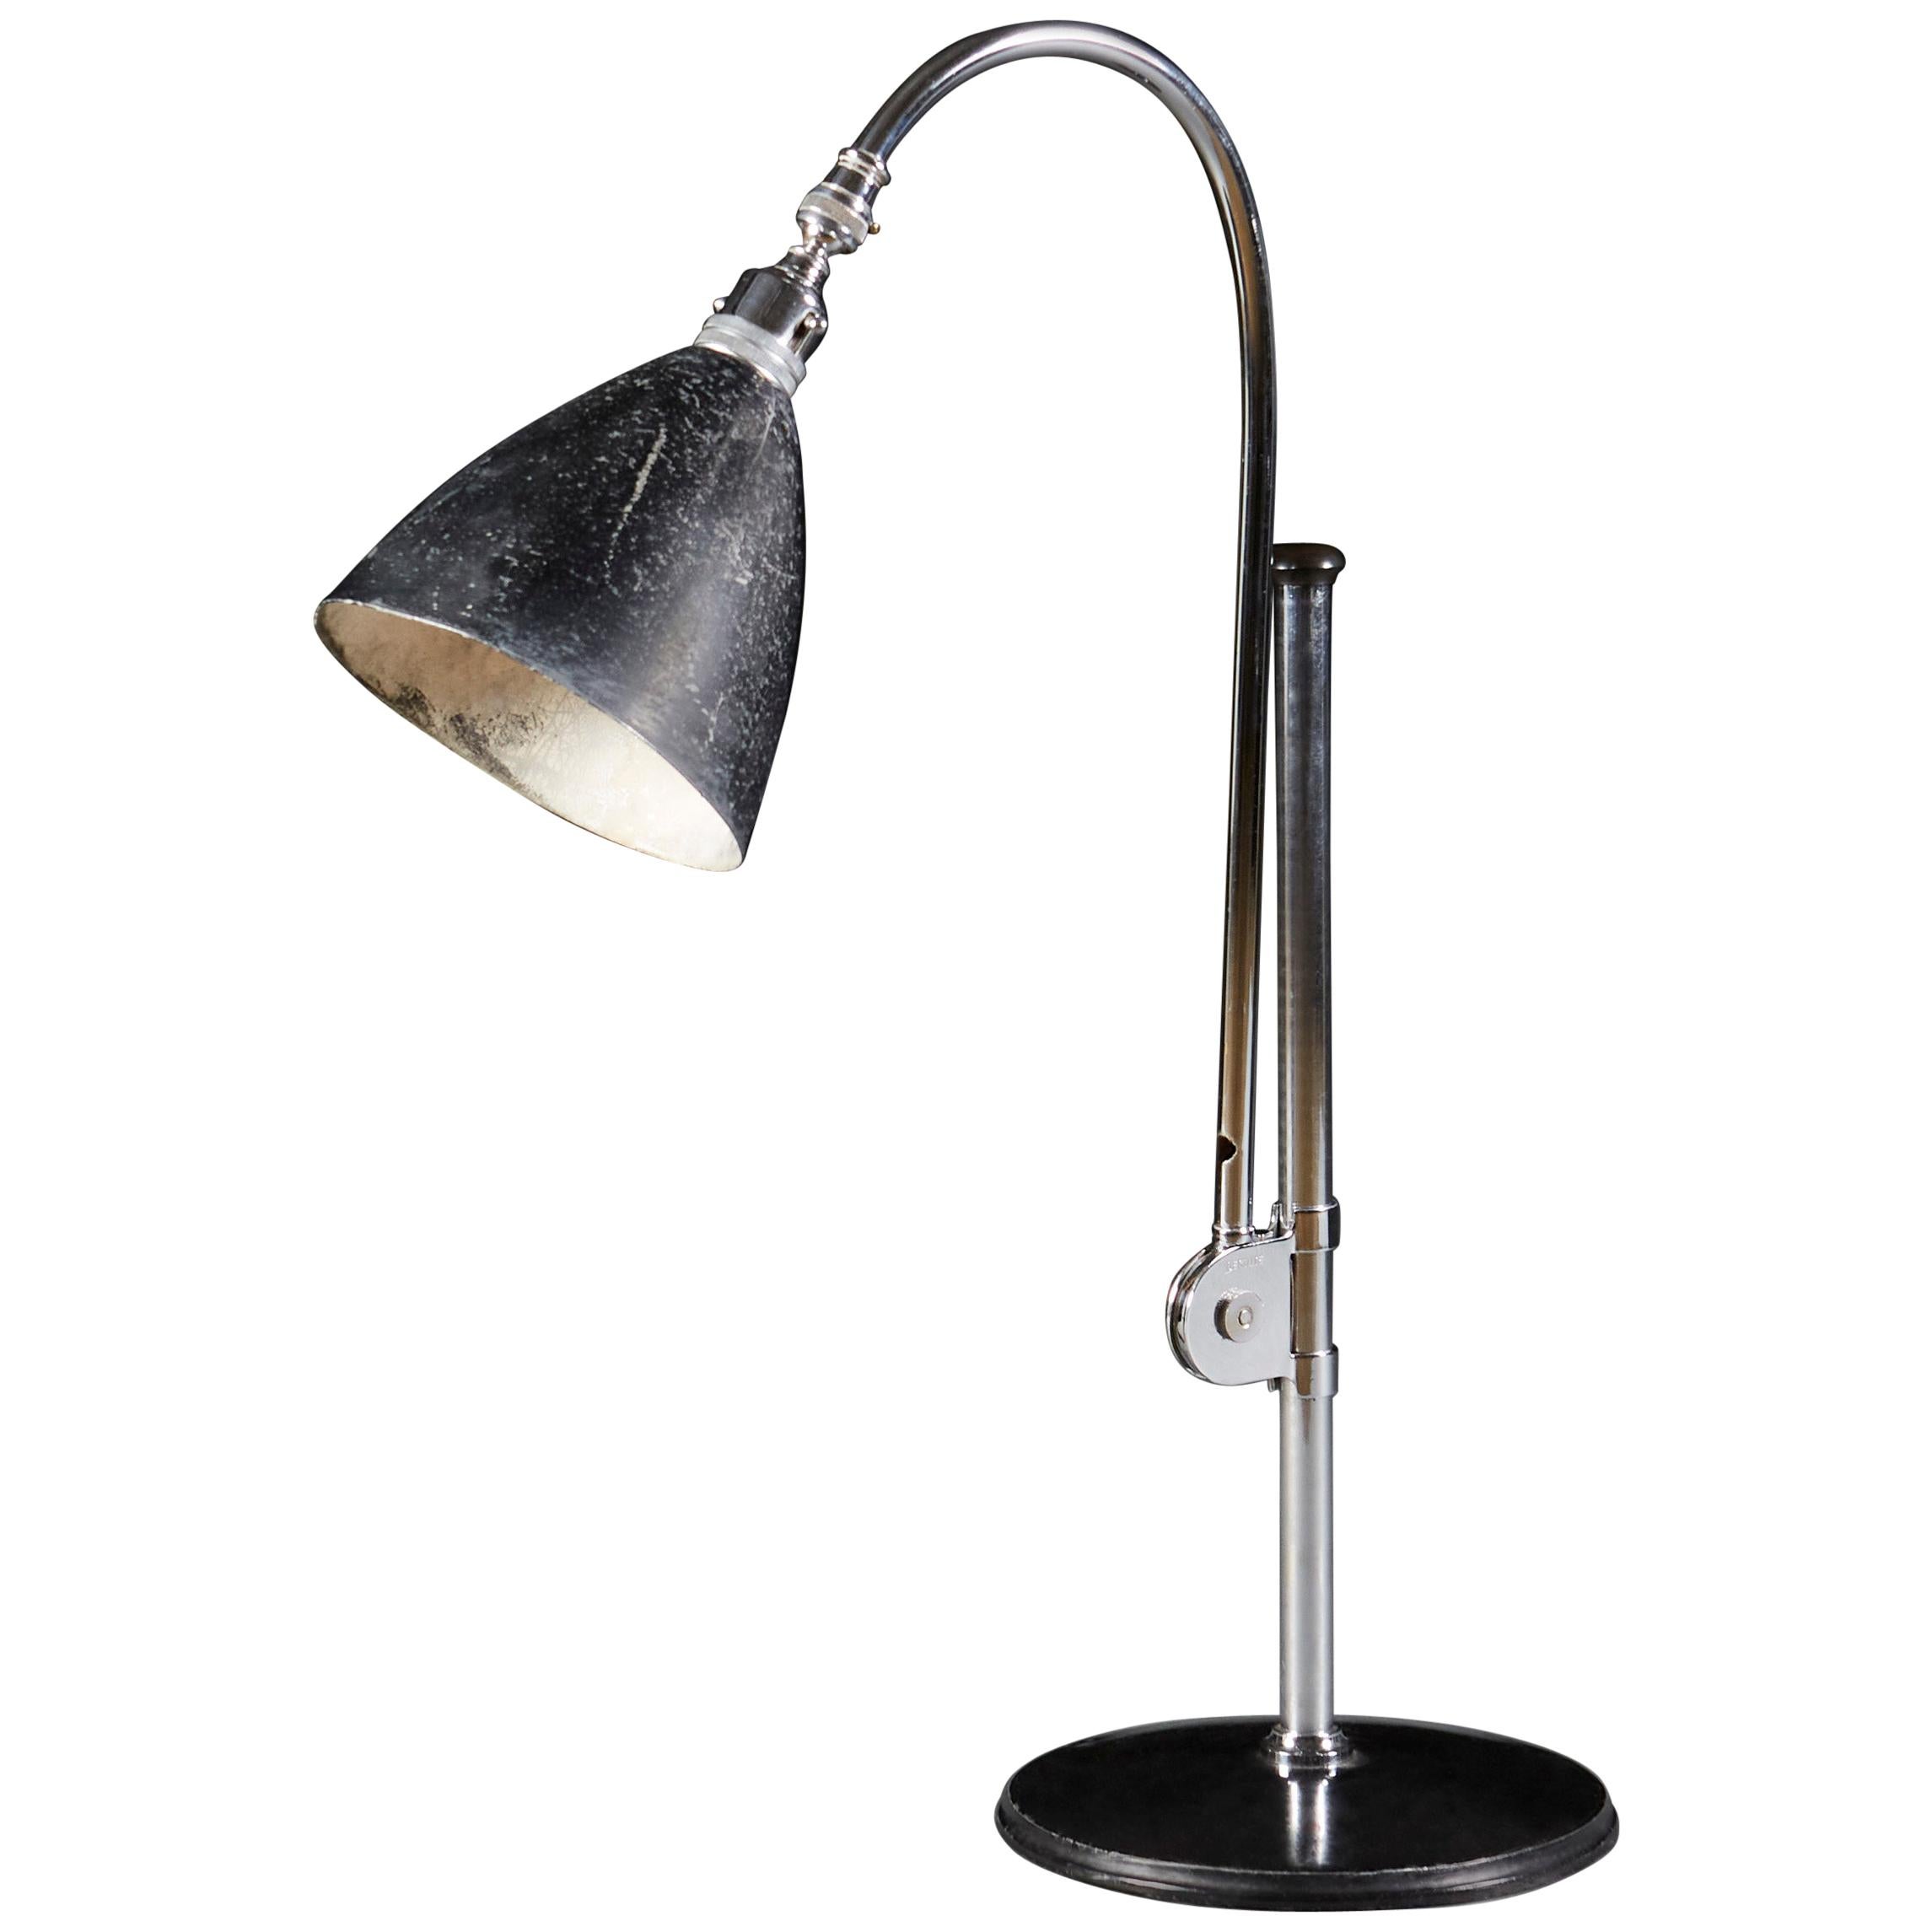 BL1 Desk Lamp by Bestlite in Chrome and Black Enamel, by Robert Dudley Best